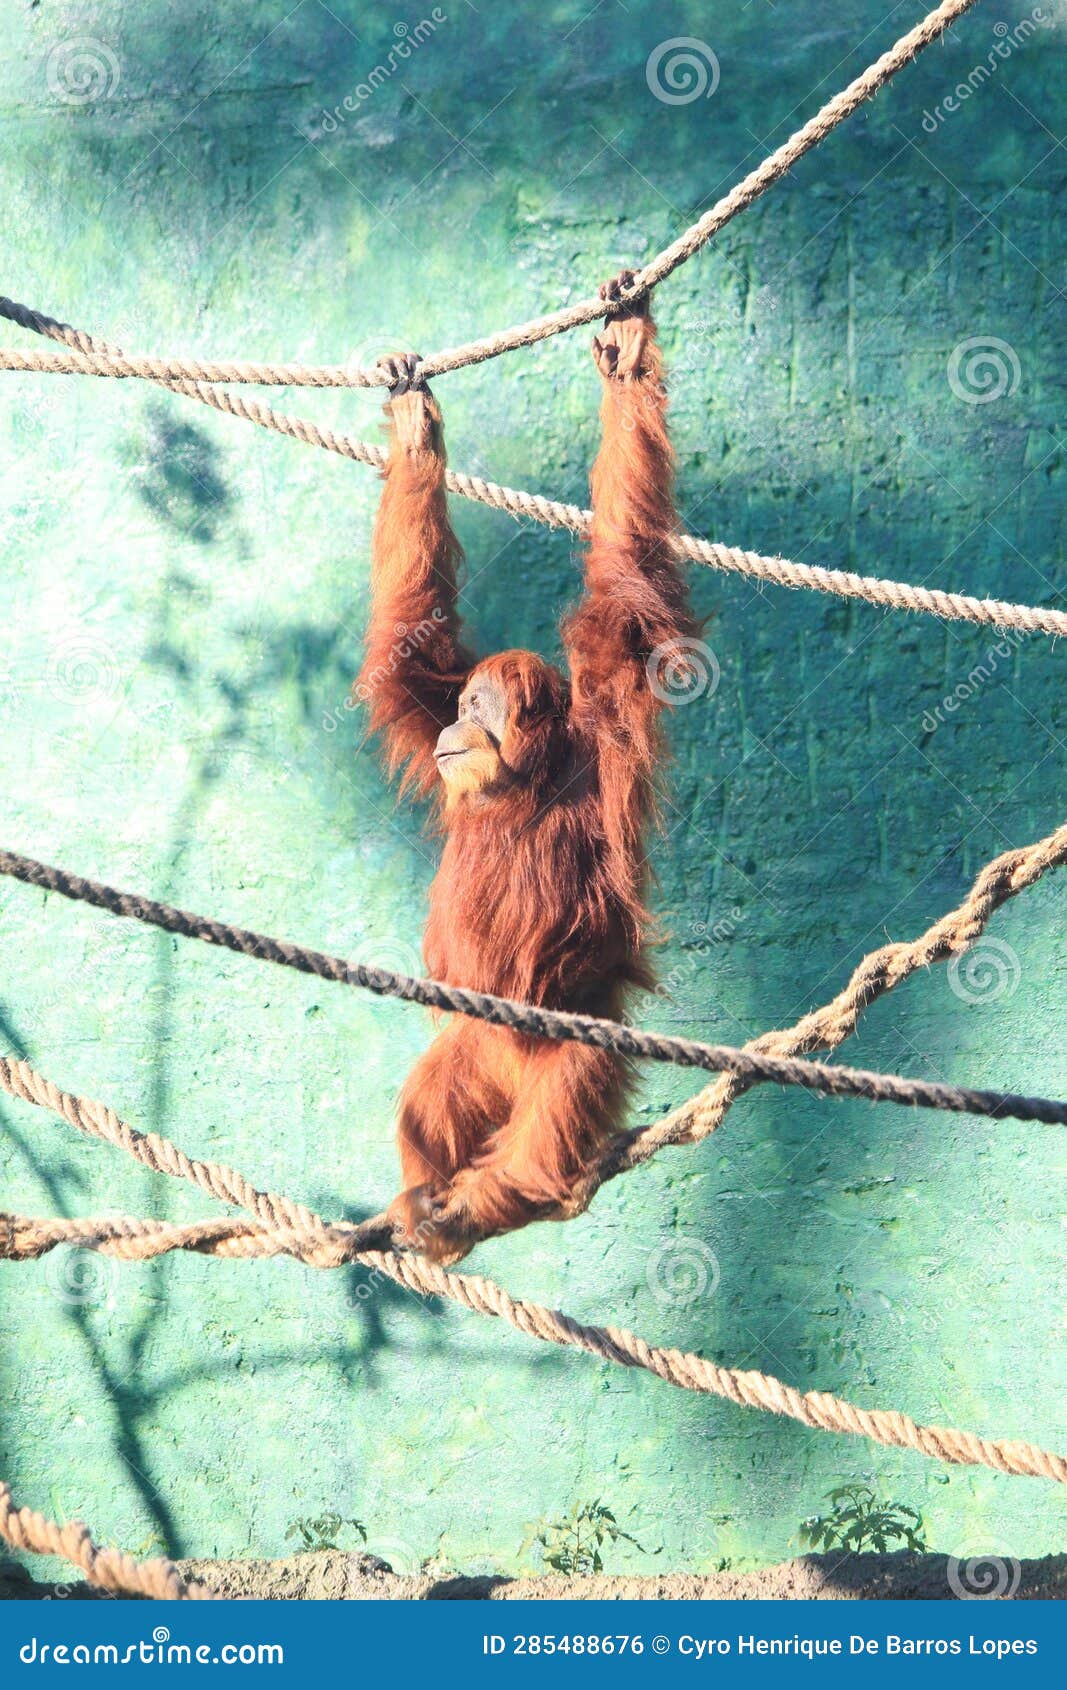 bornean orangutan (pongo pygmaeus) in toy rope structure playing with himself, bornean simian, big monkey